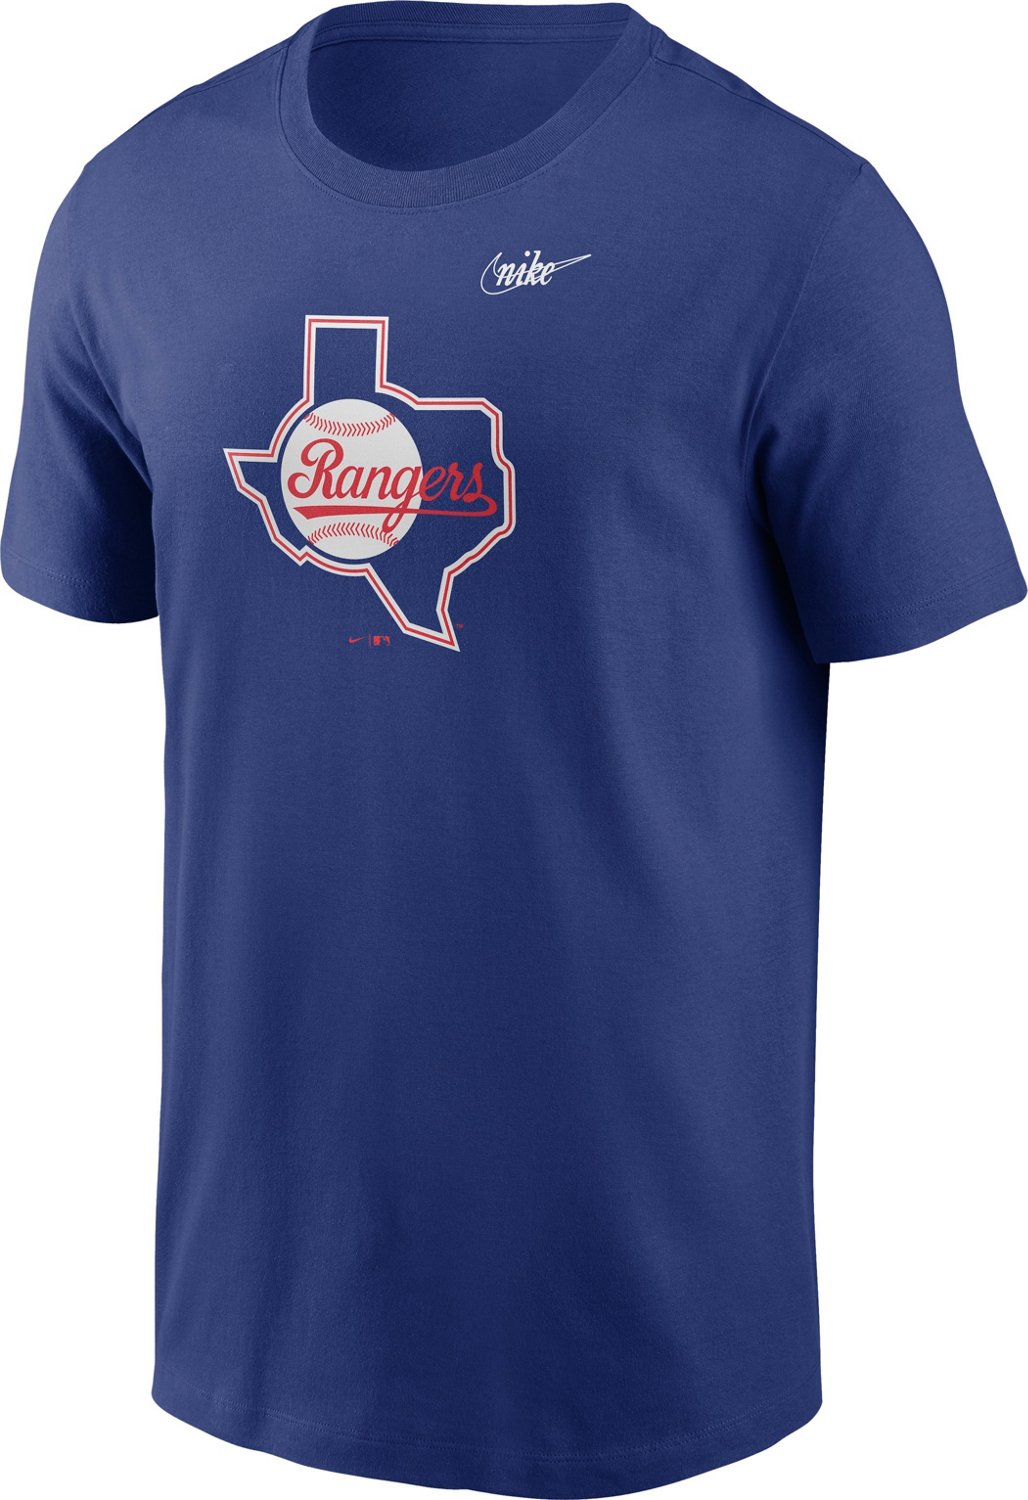 Nike Men's Texas Rangers Cooperstown Logo Graphic Short Sleeve T-shirt ...